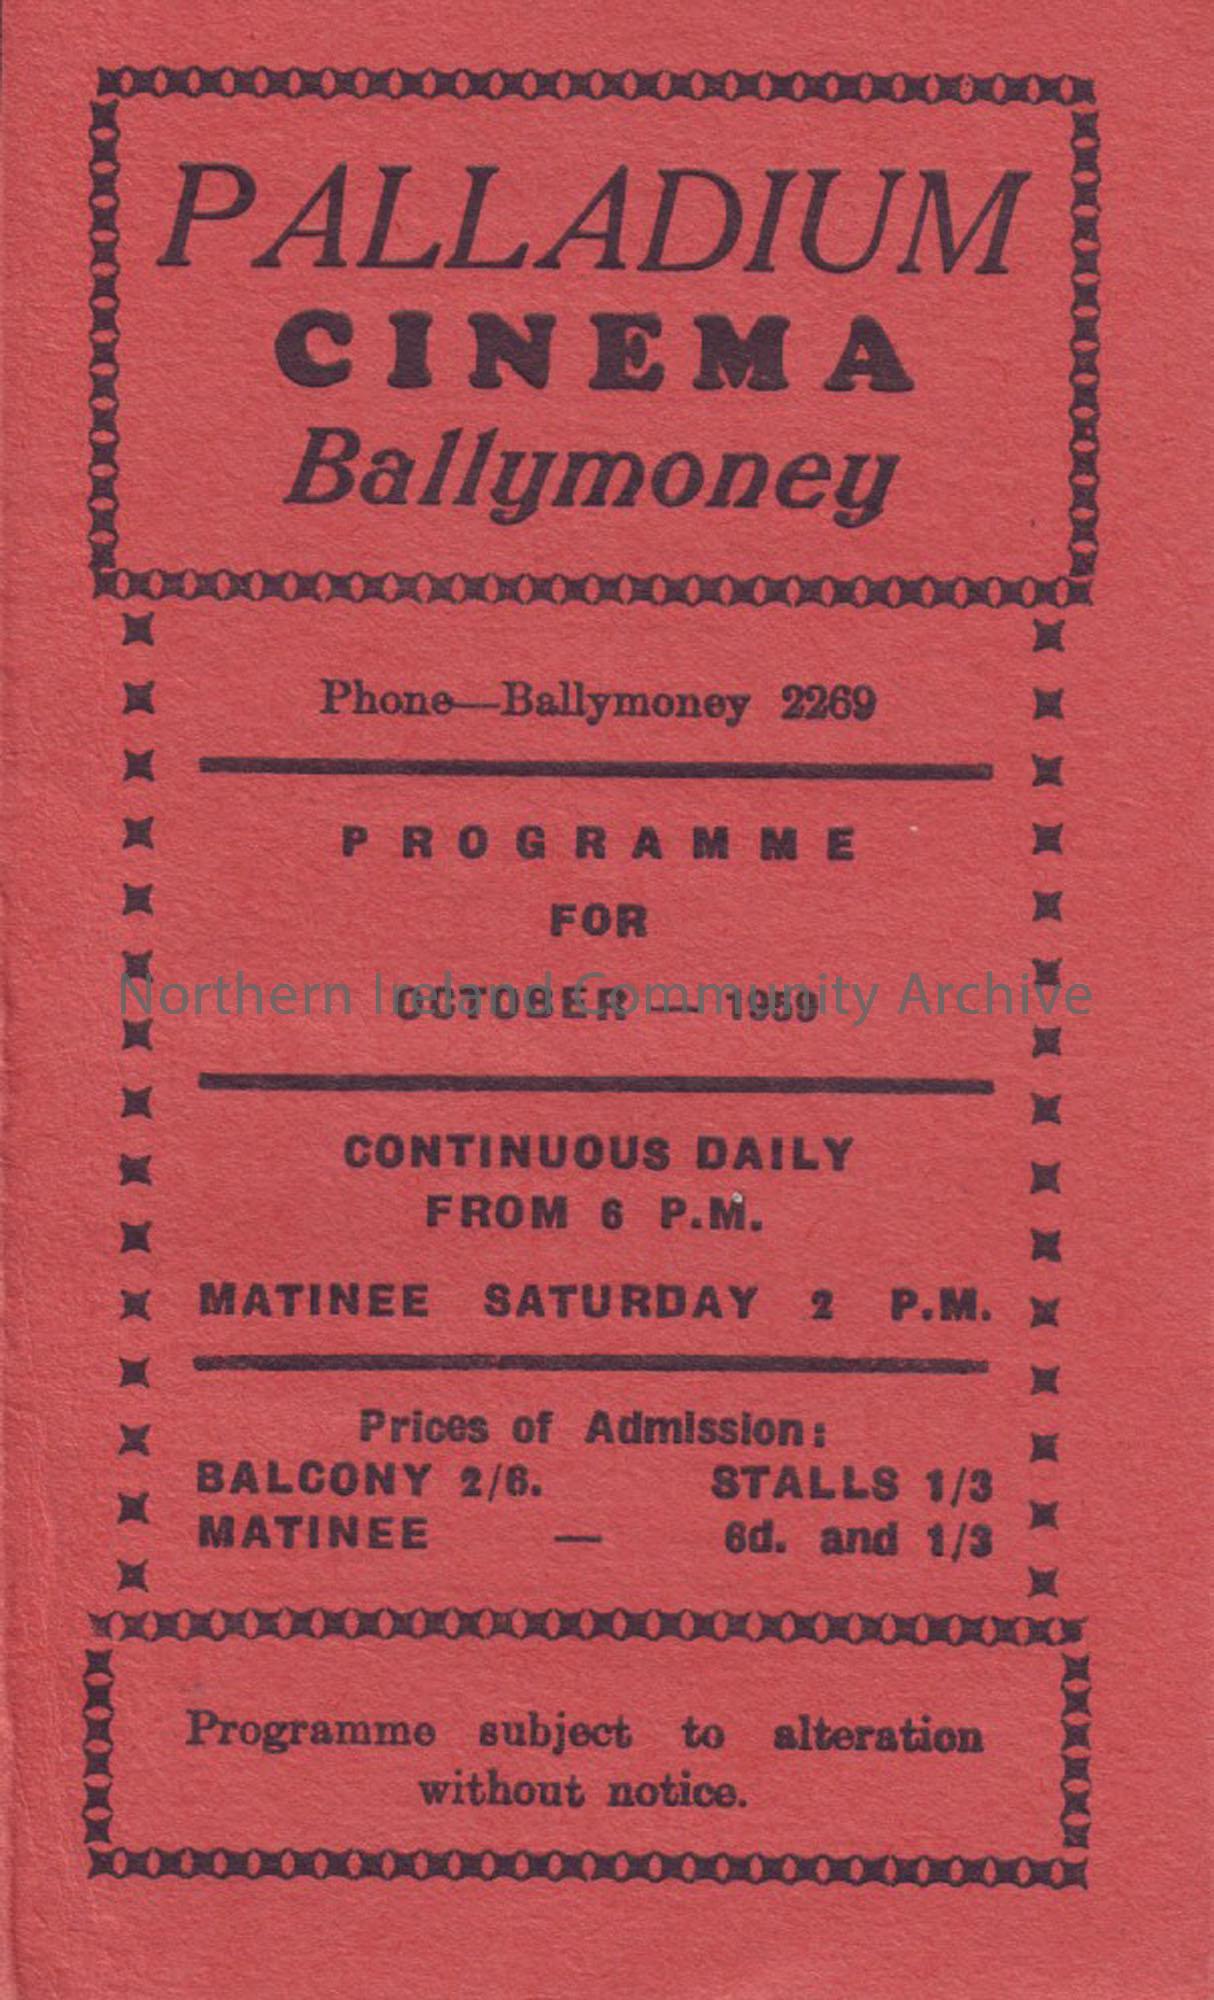 orange monthly programme for Ballymoney Palladium cinema- October 1959